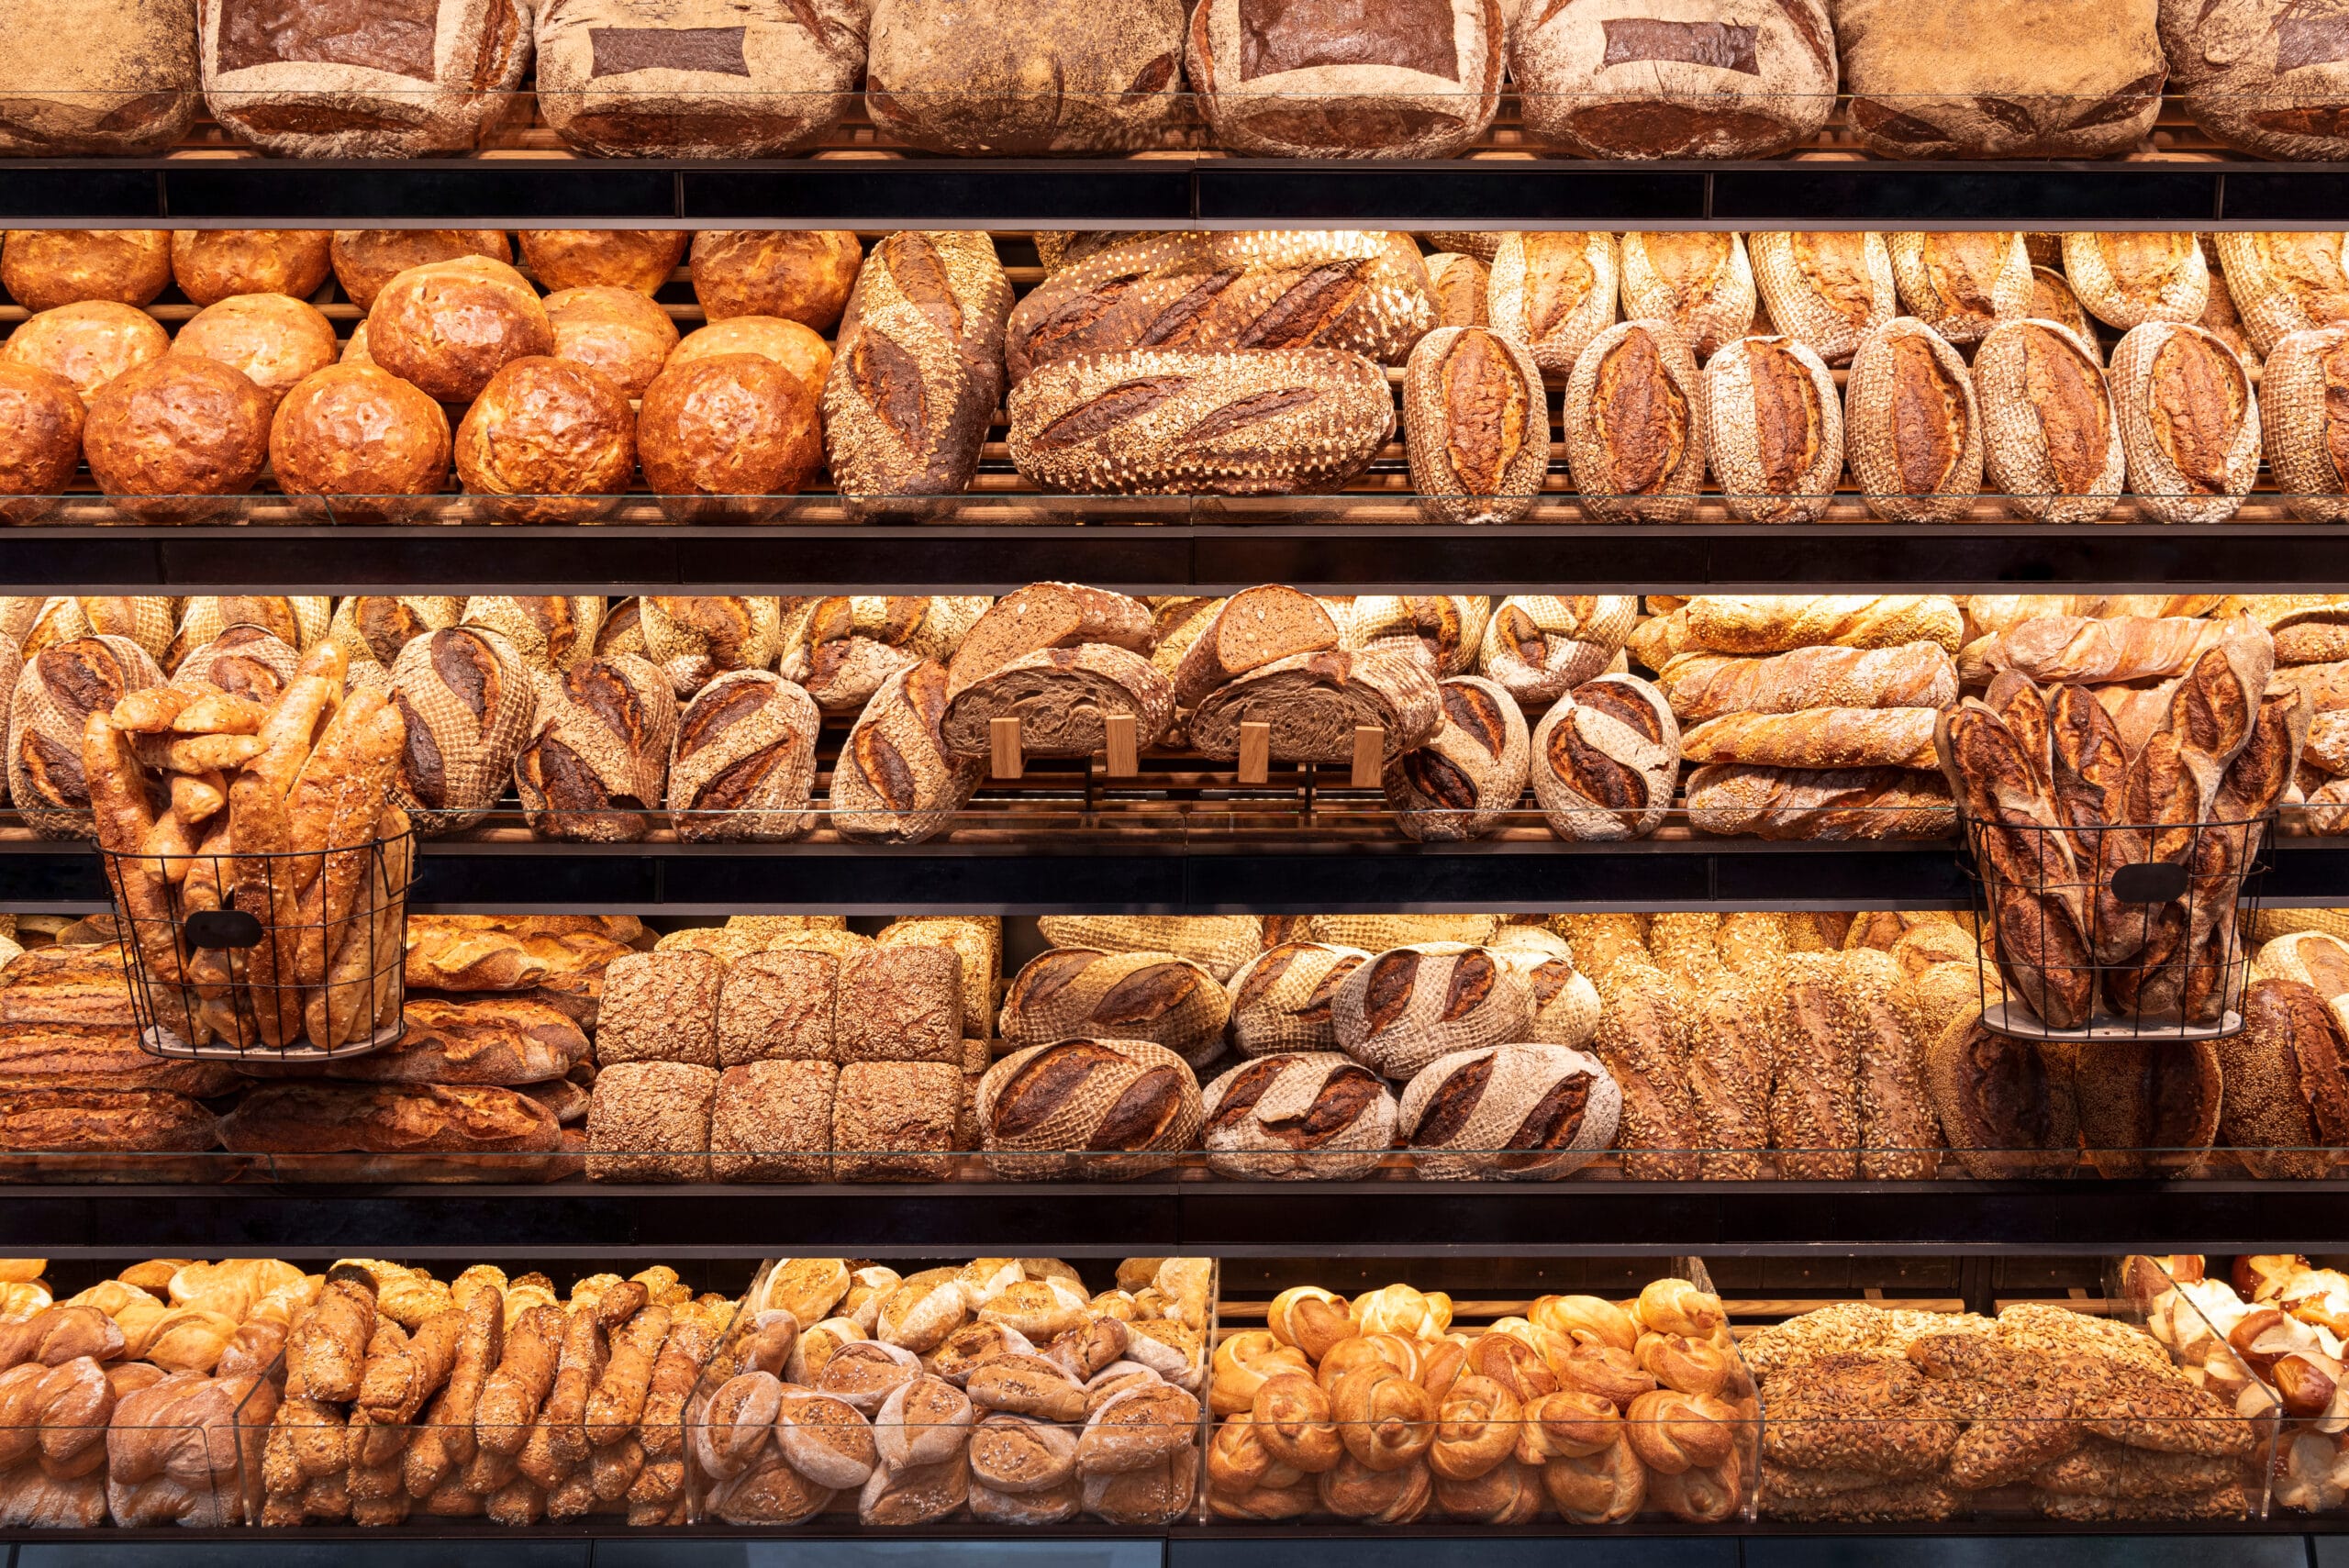 Loaves of bread on a shelf